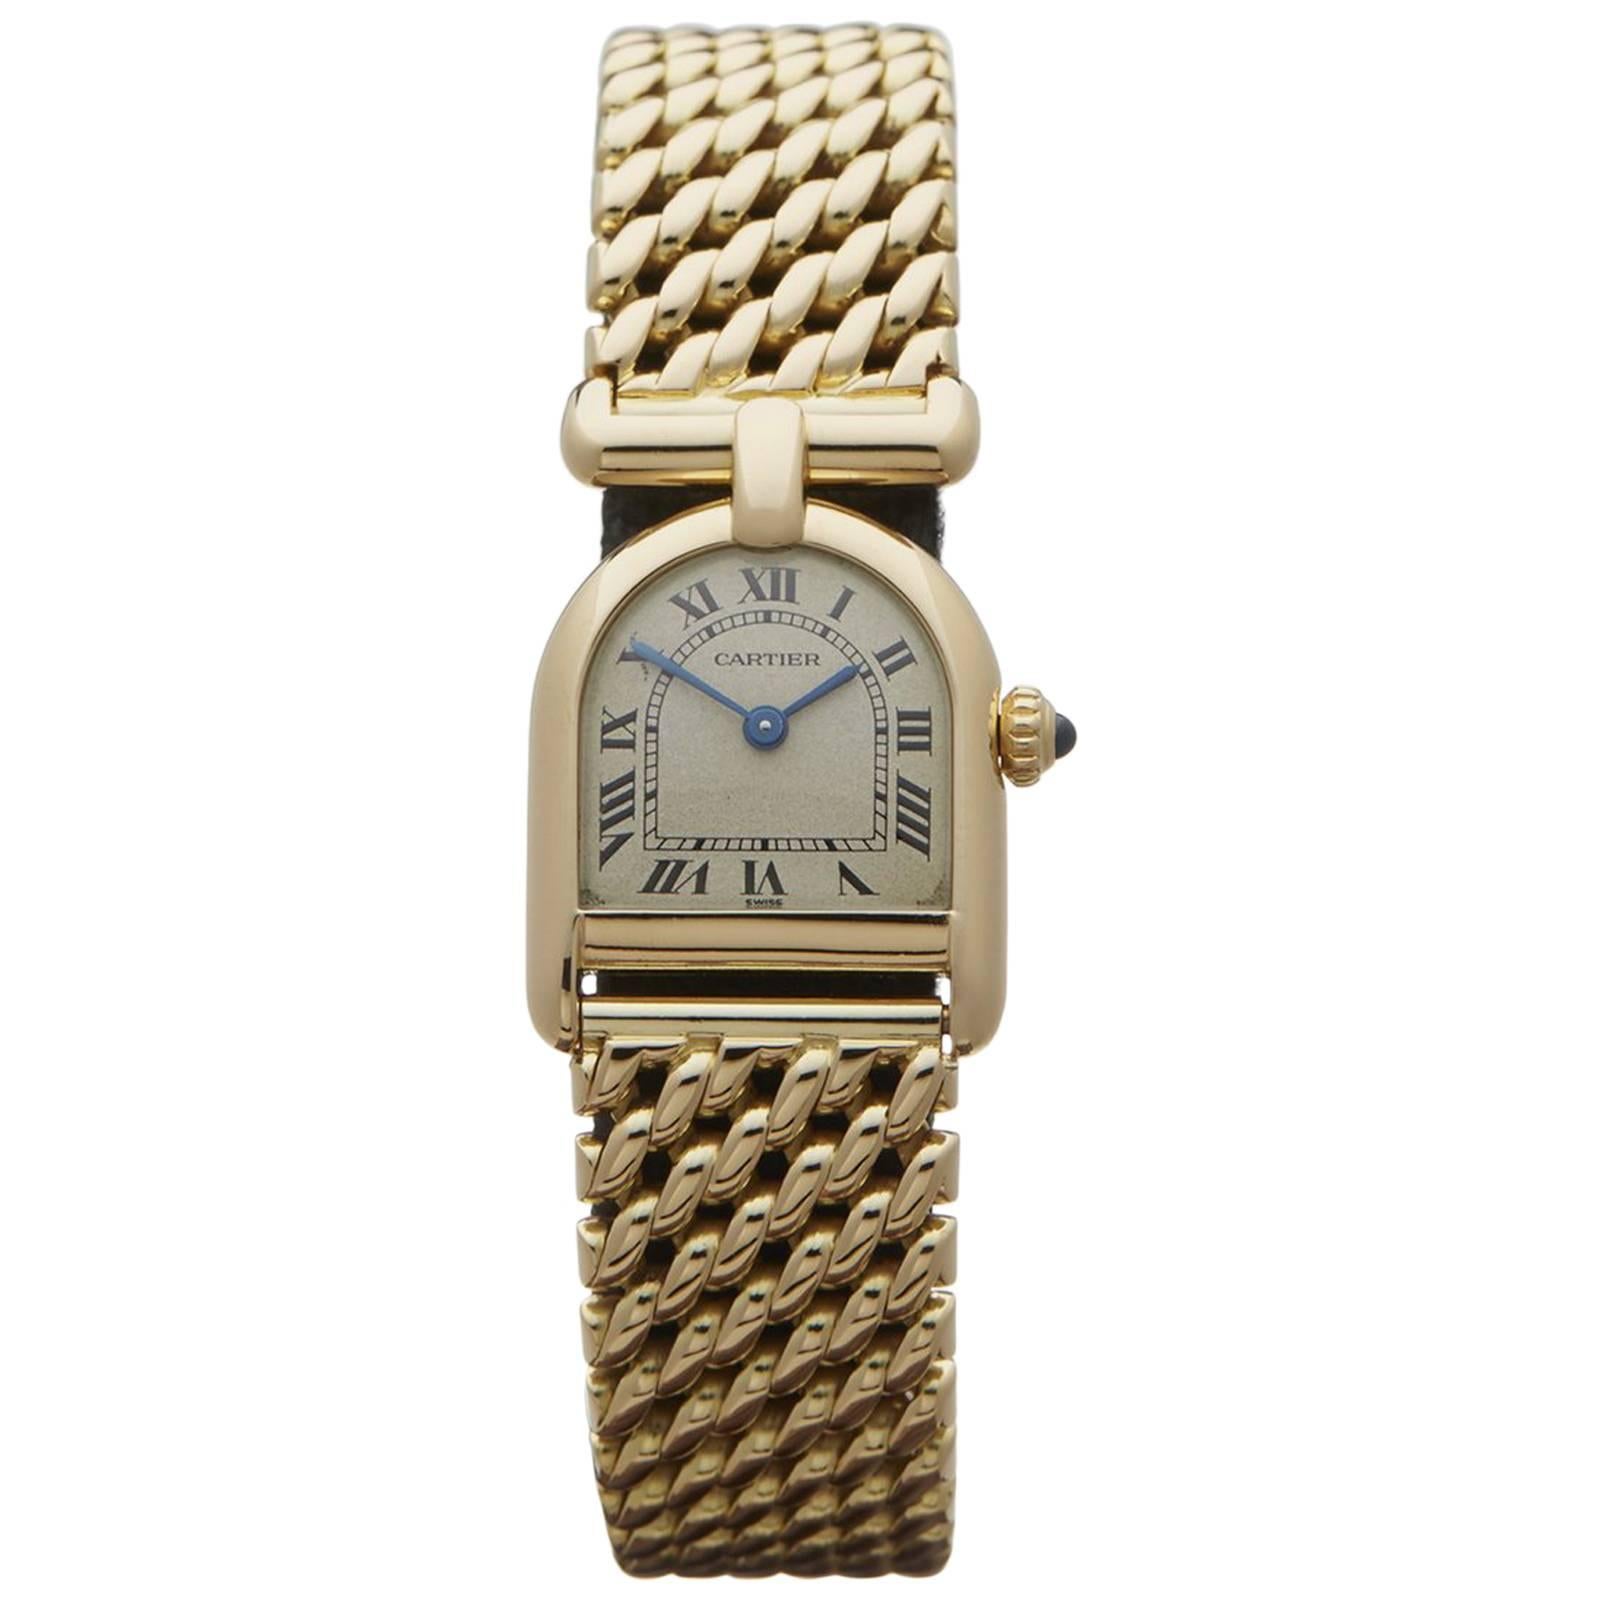  Cartier Ladies Yellow Gold Quartz Wristwatch 1990